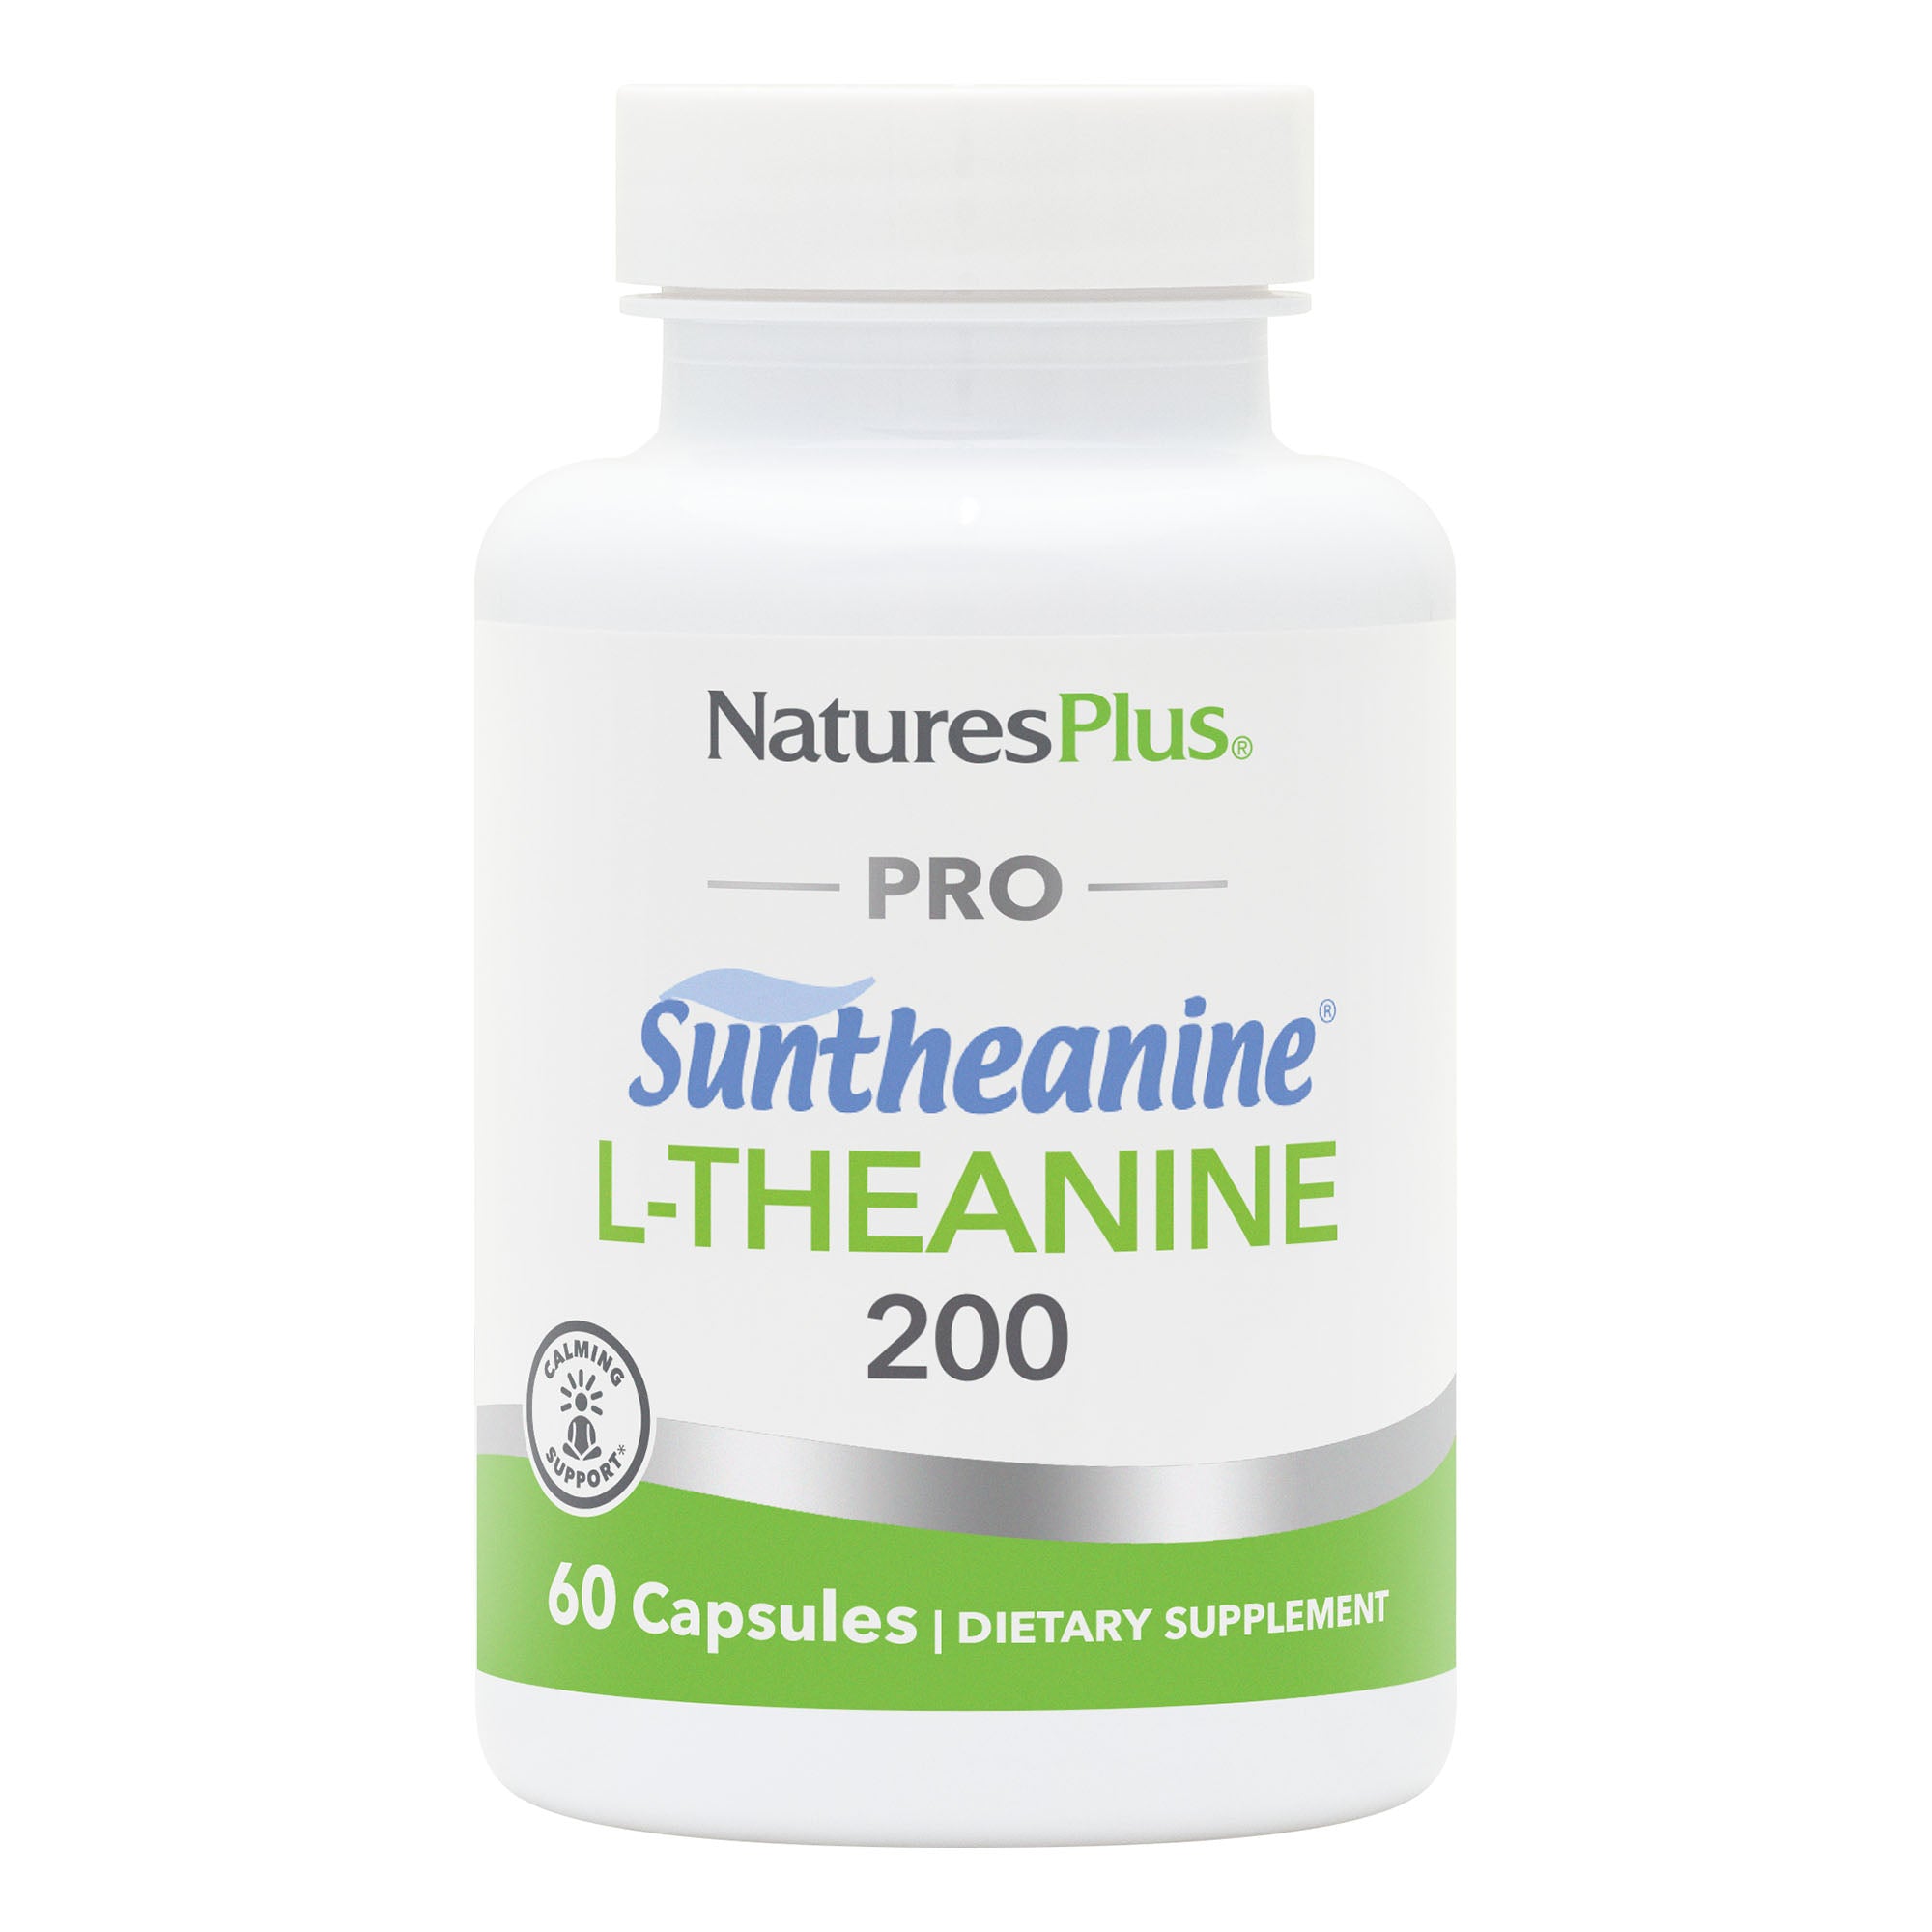 NaturesPlus PRO Suntheanine® L-Theanine 200